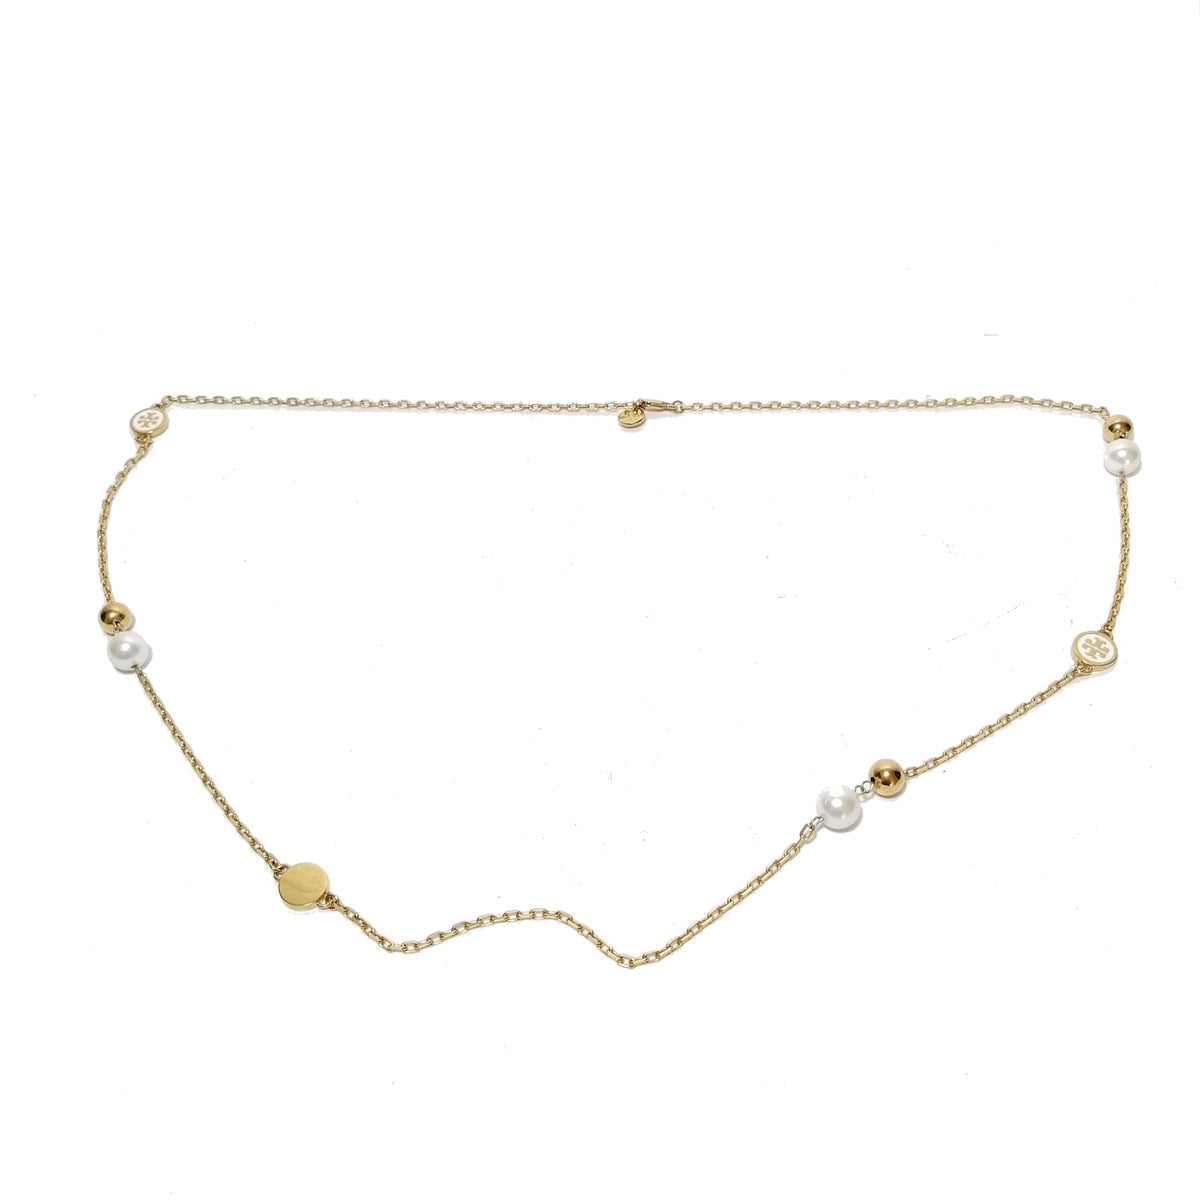 Tory Burch Kira Gold-Plated Freshwater Pearl Necklace | TheHut.com